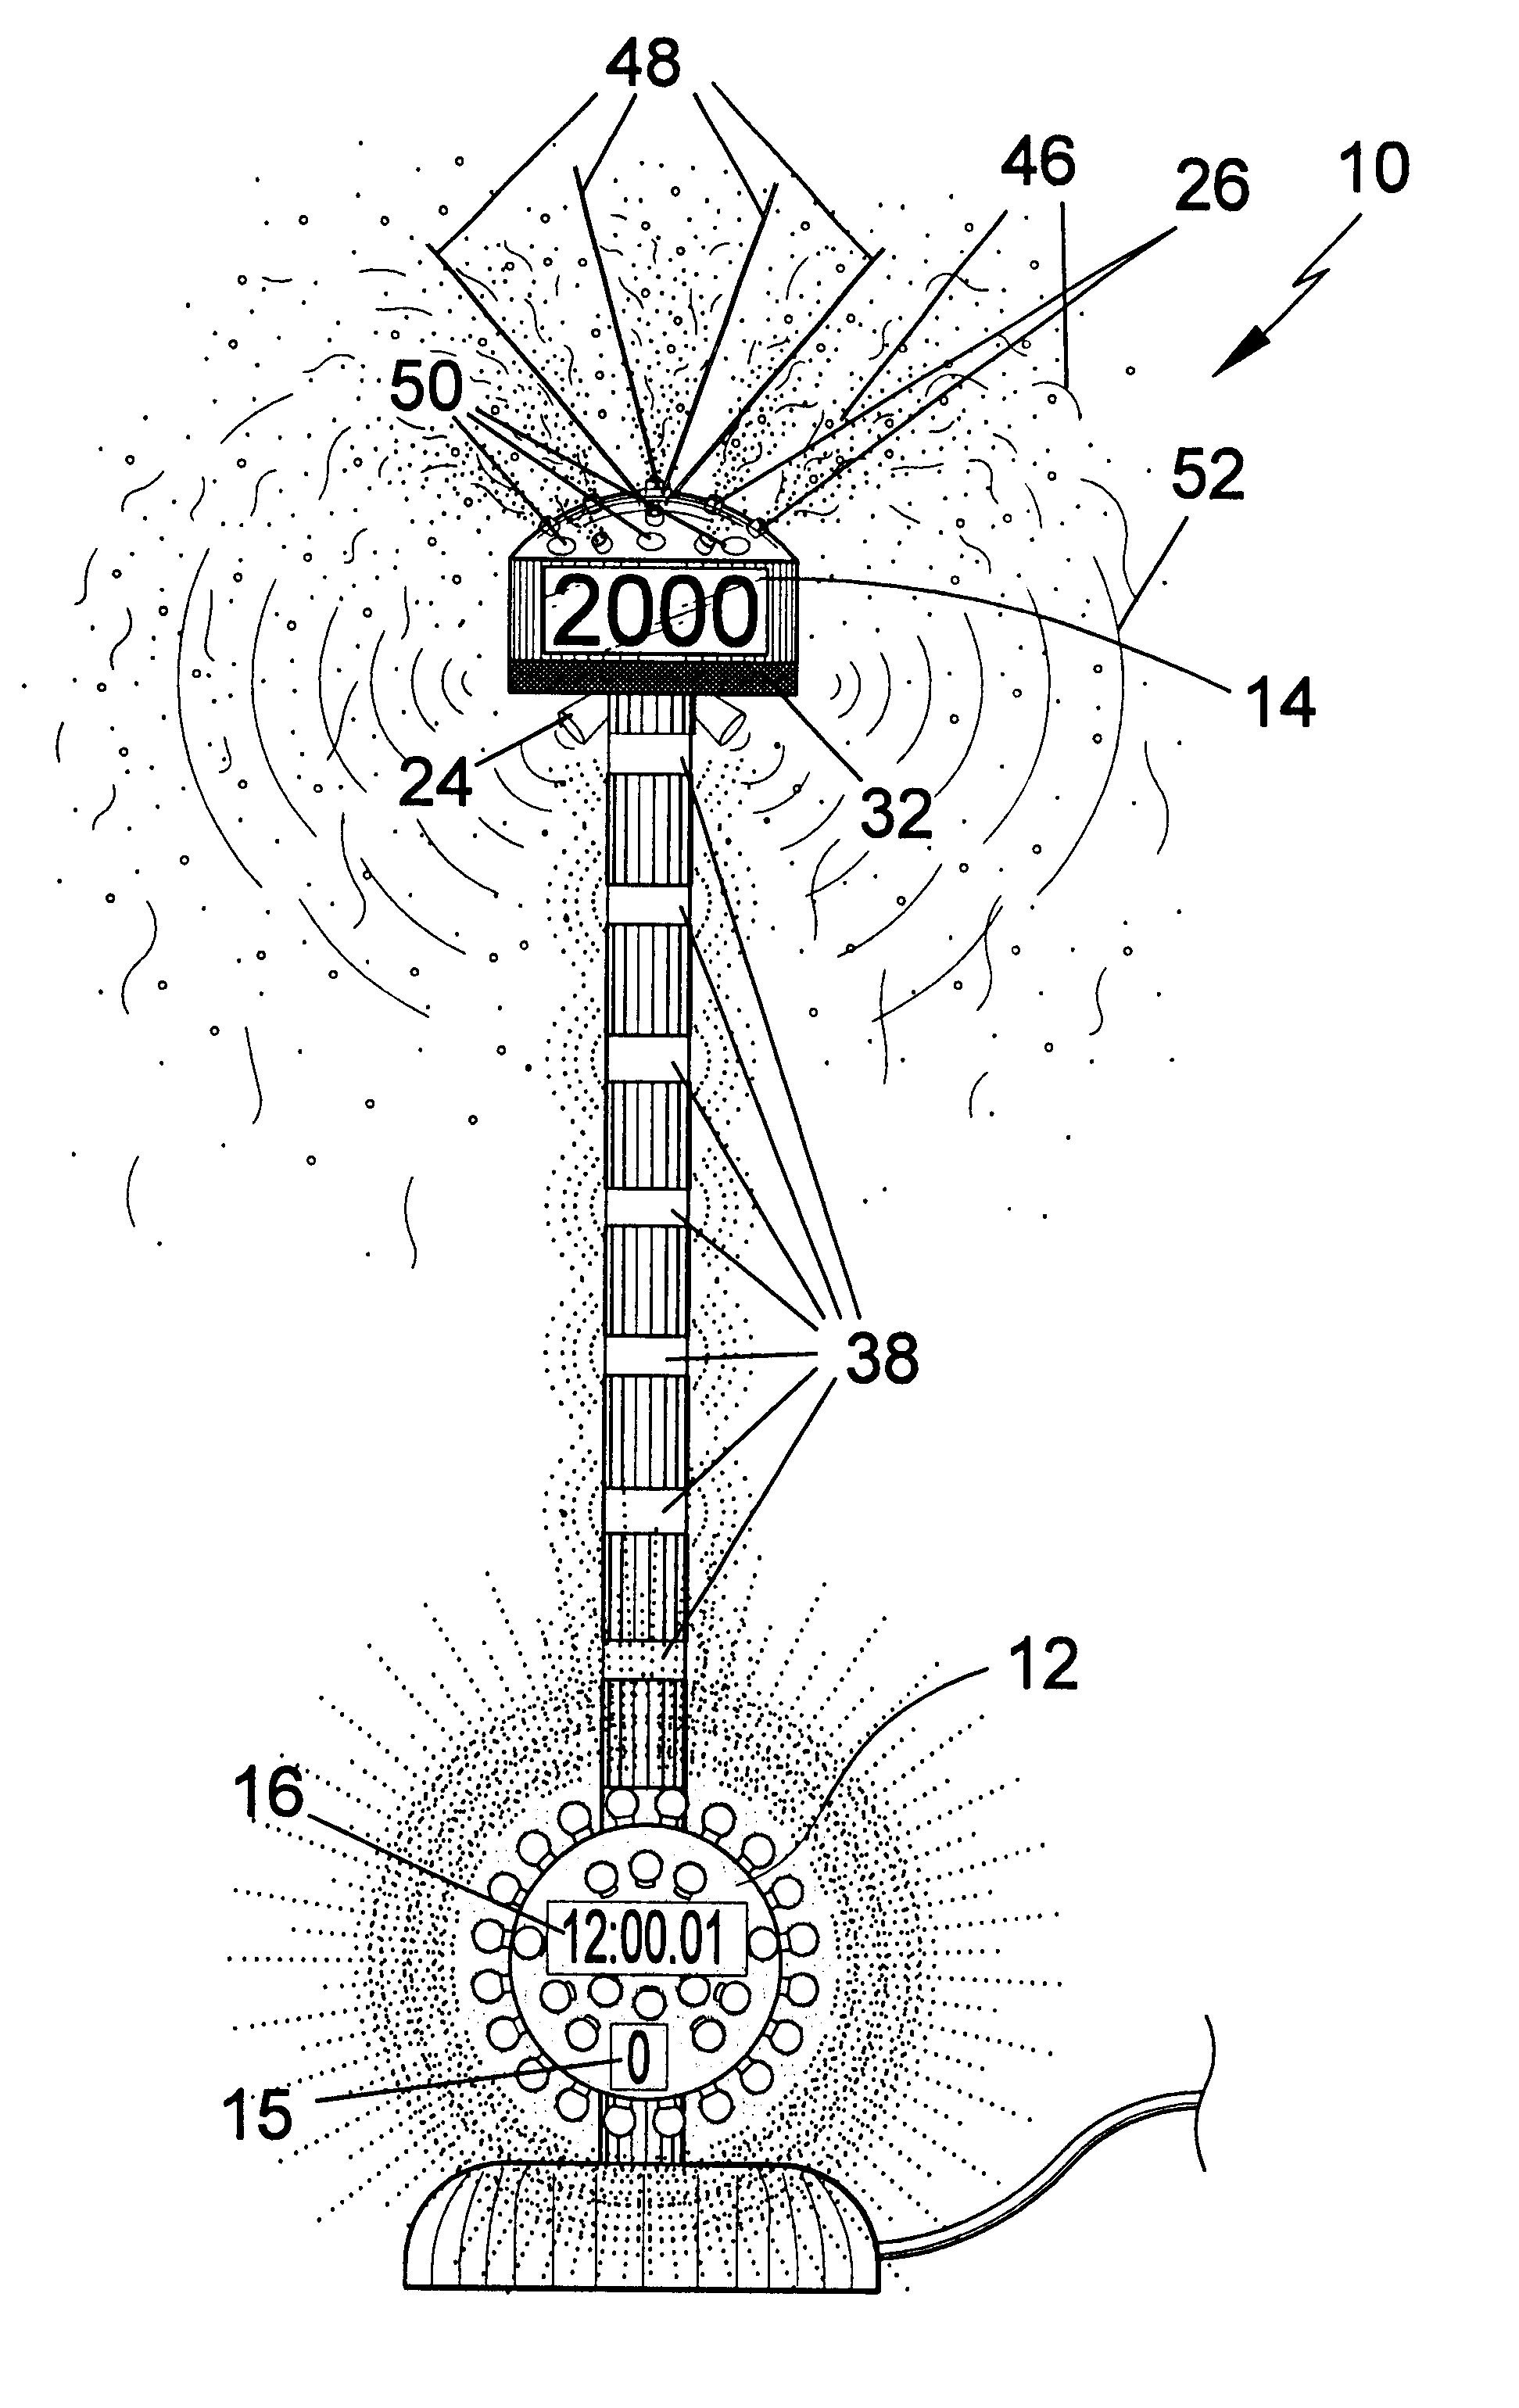 Synchronized confetti sprayer and descending illuminated ball